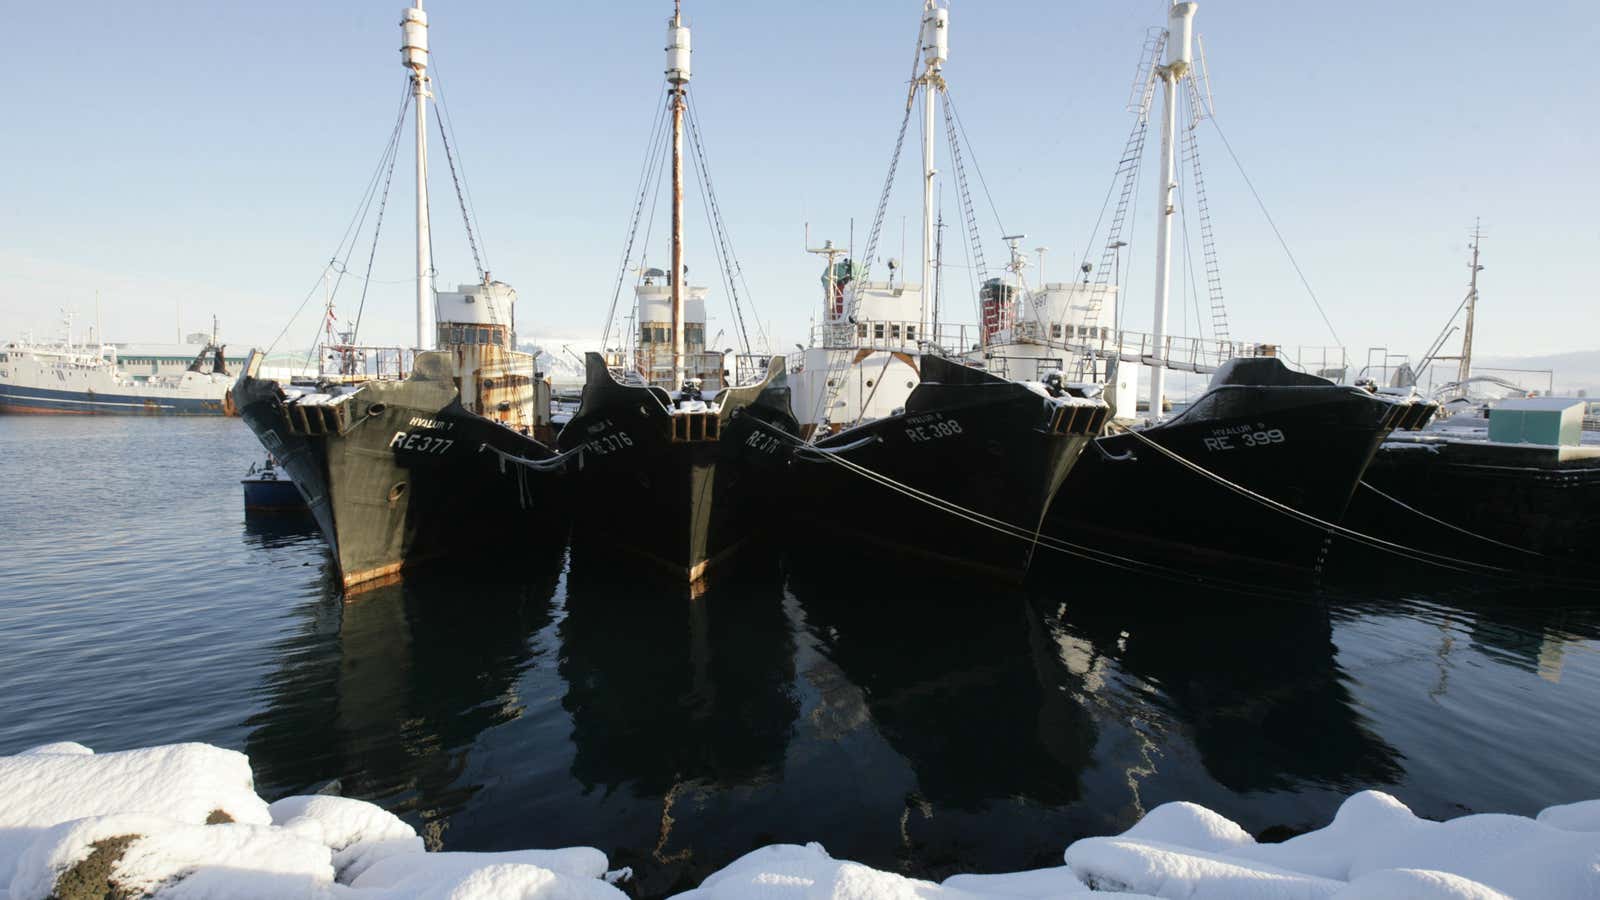 Whaling ships in tourist capital Reykjavik.